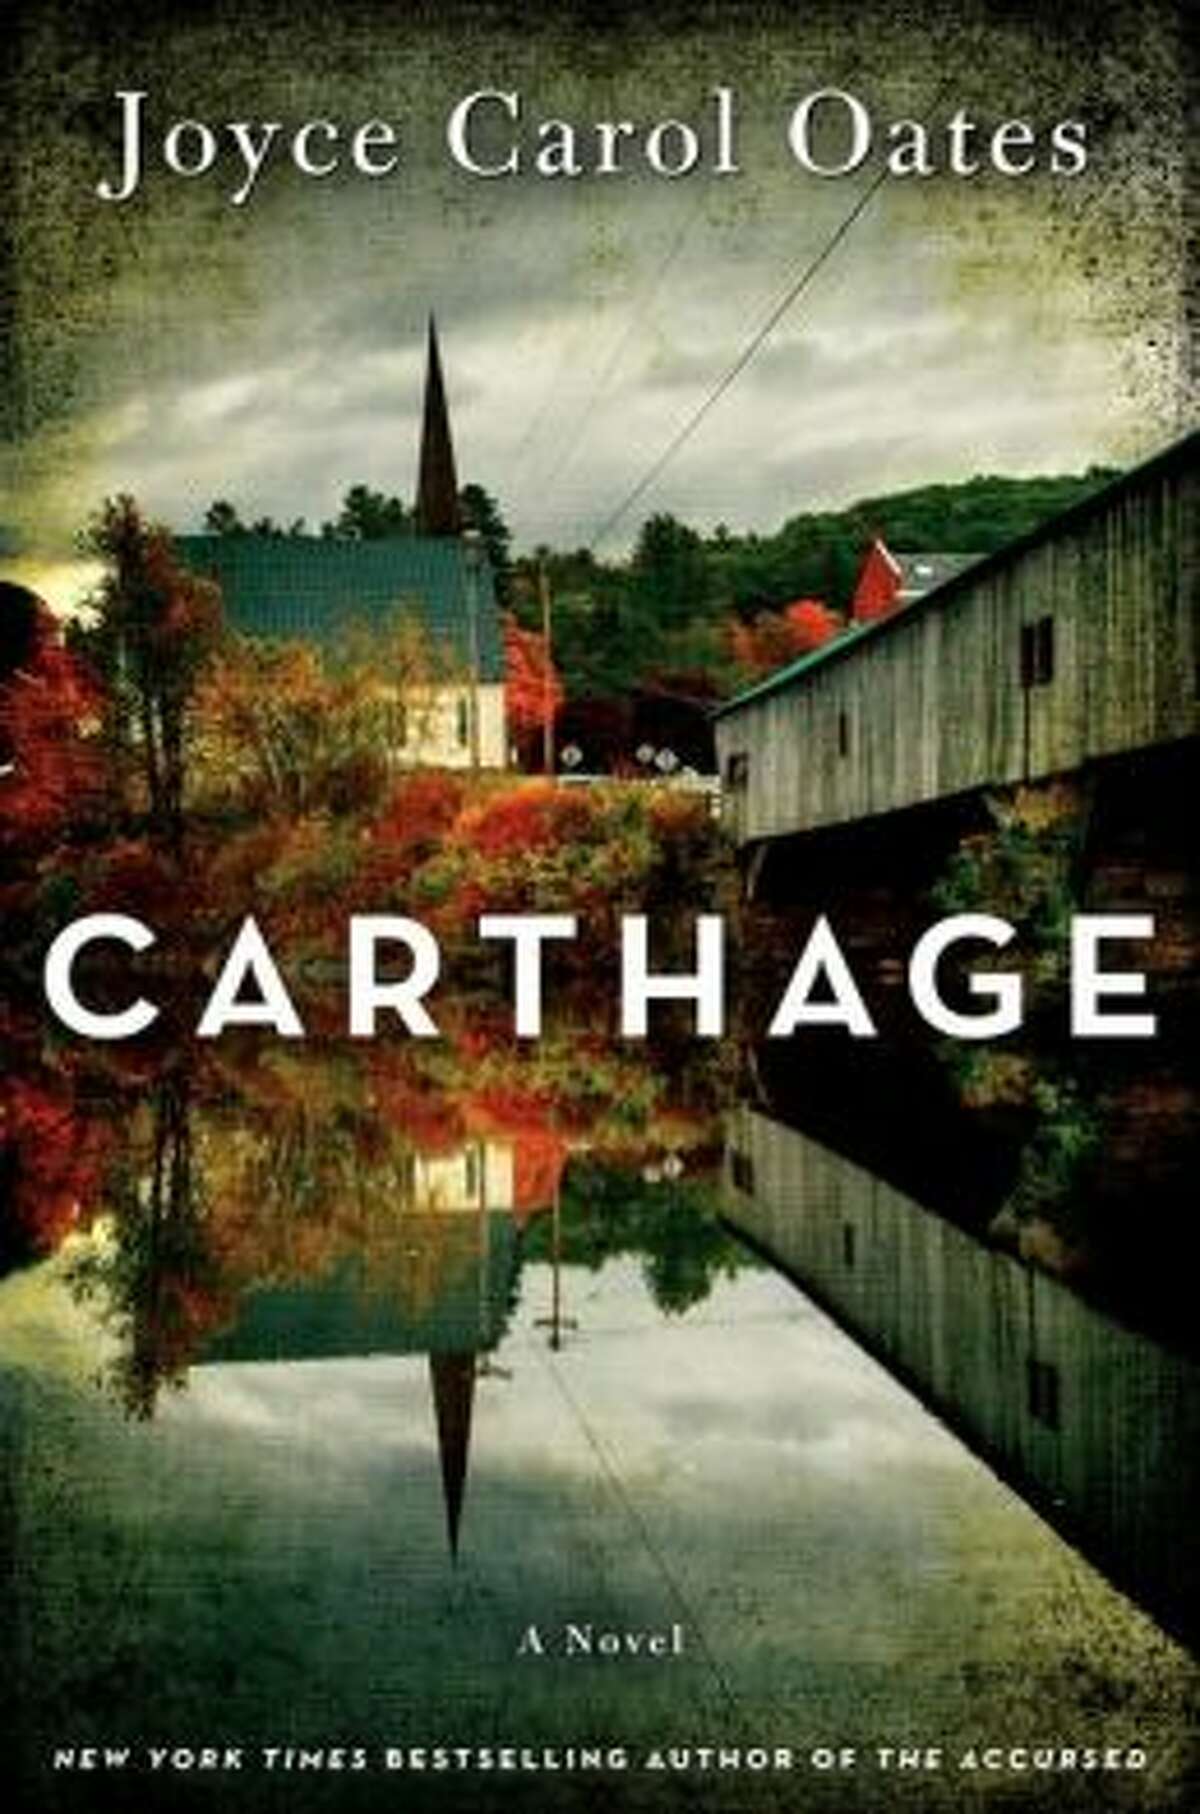 "Carthage" by Joyce Carol Oates